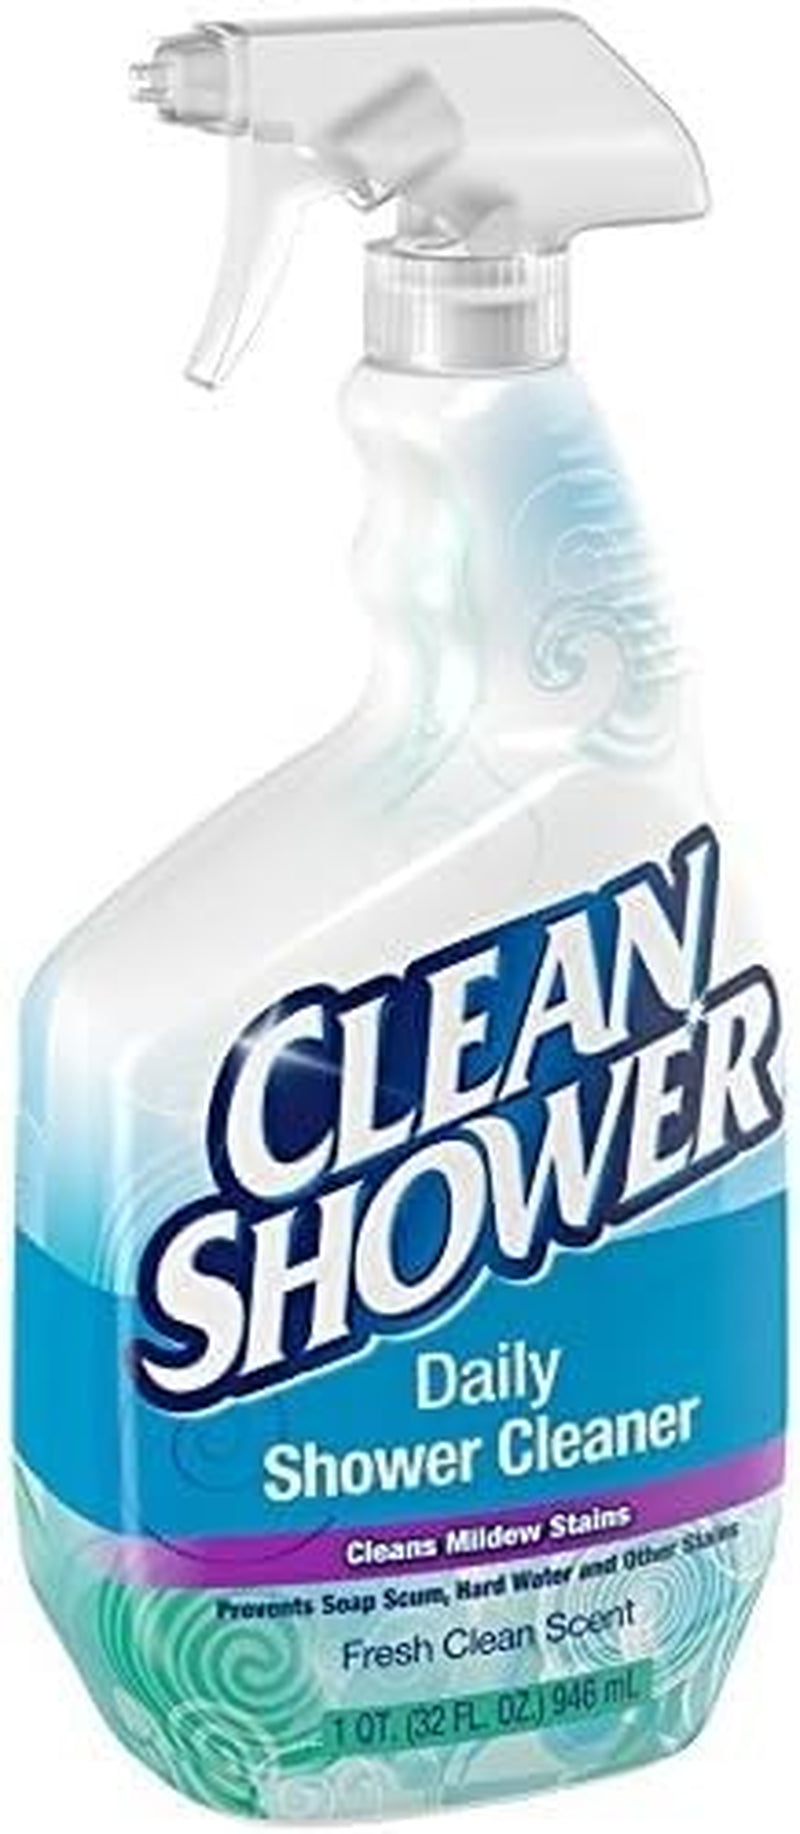 Daily Shower Cleaner, 32 Fluid Ounce